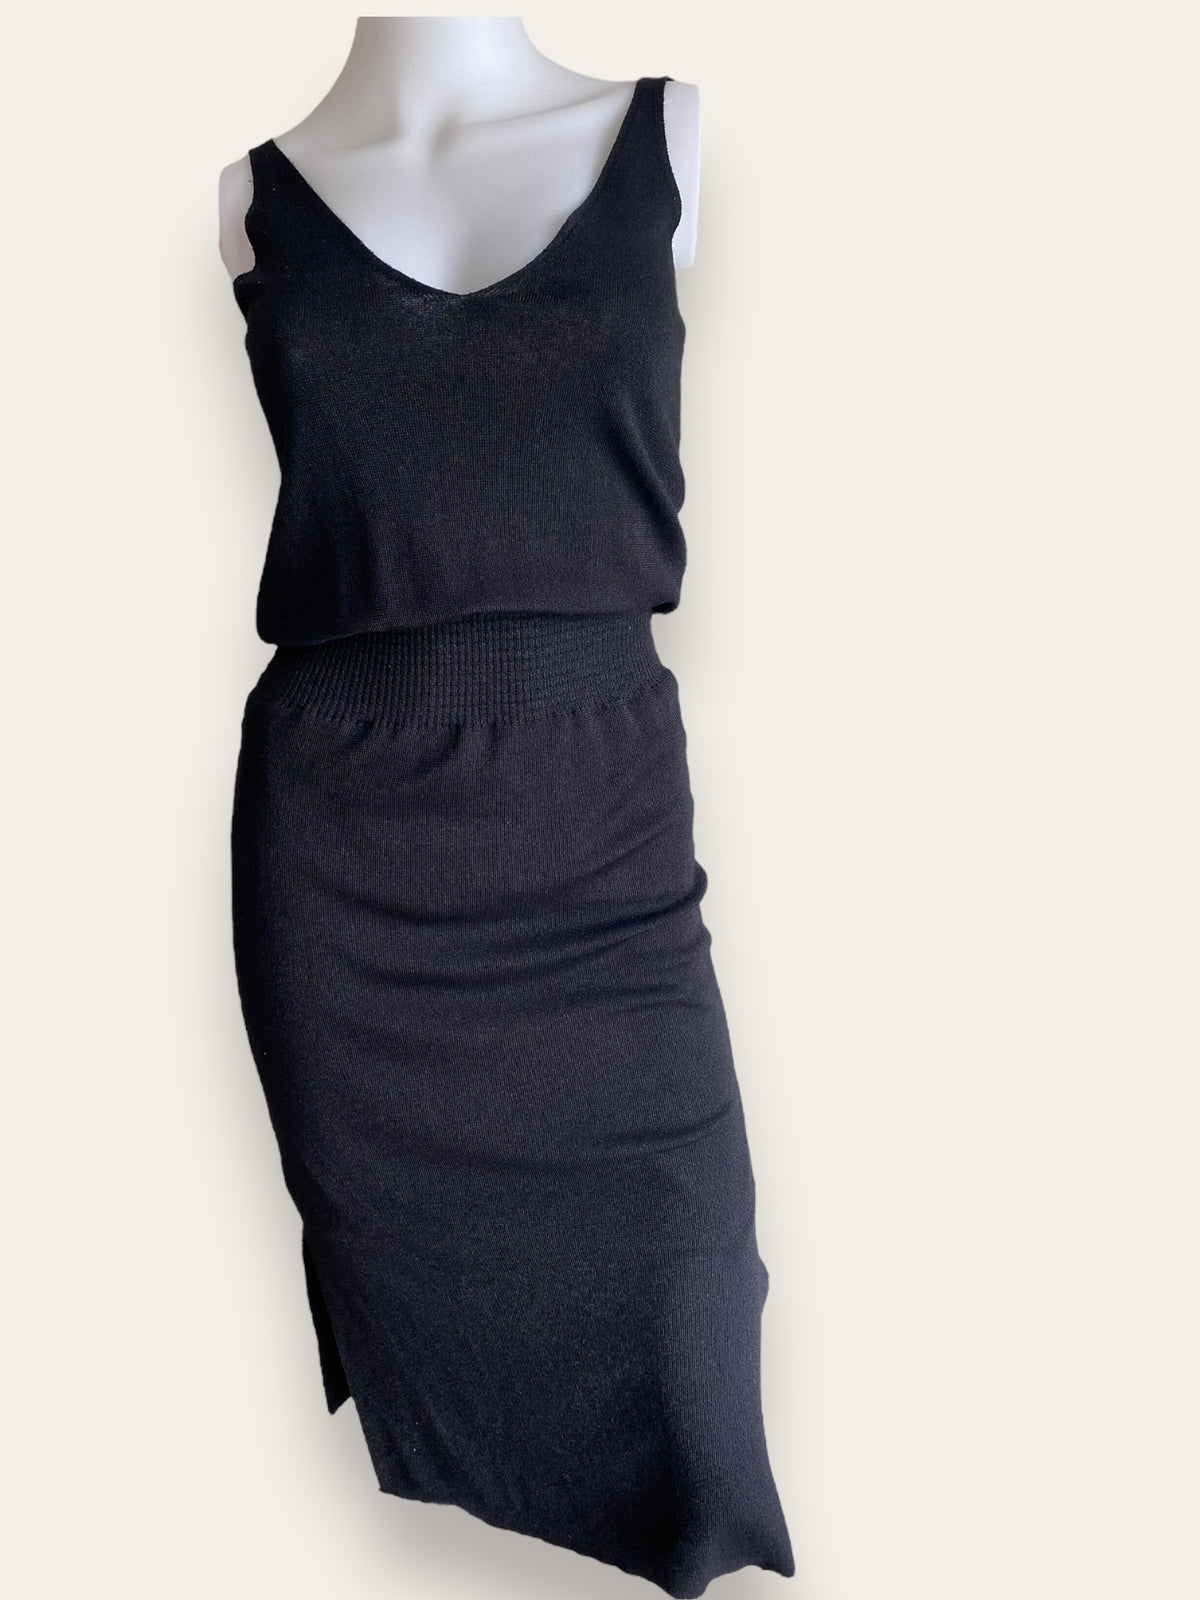 ZARA black knit sleeveless dress M